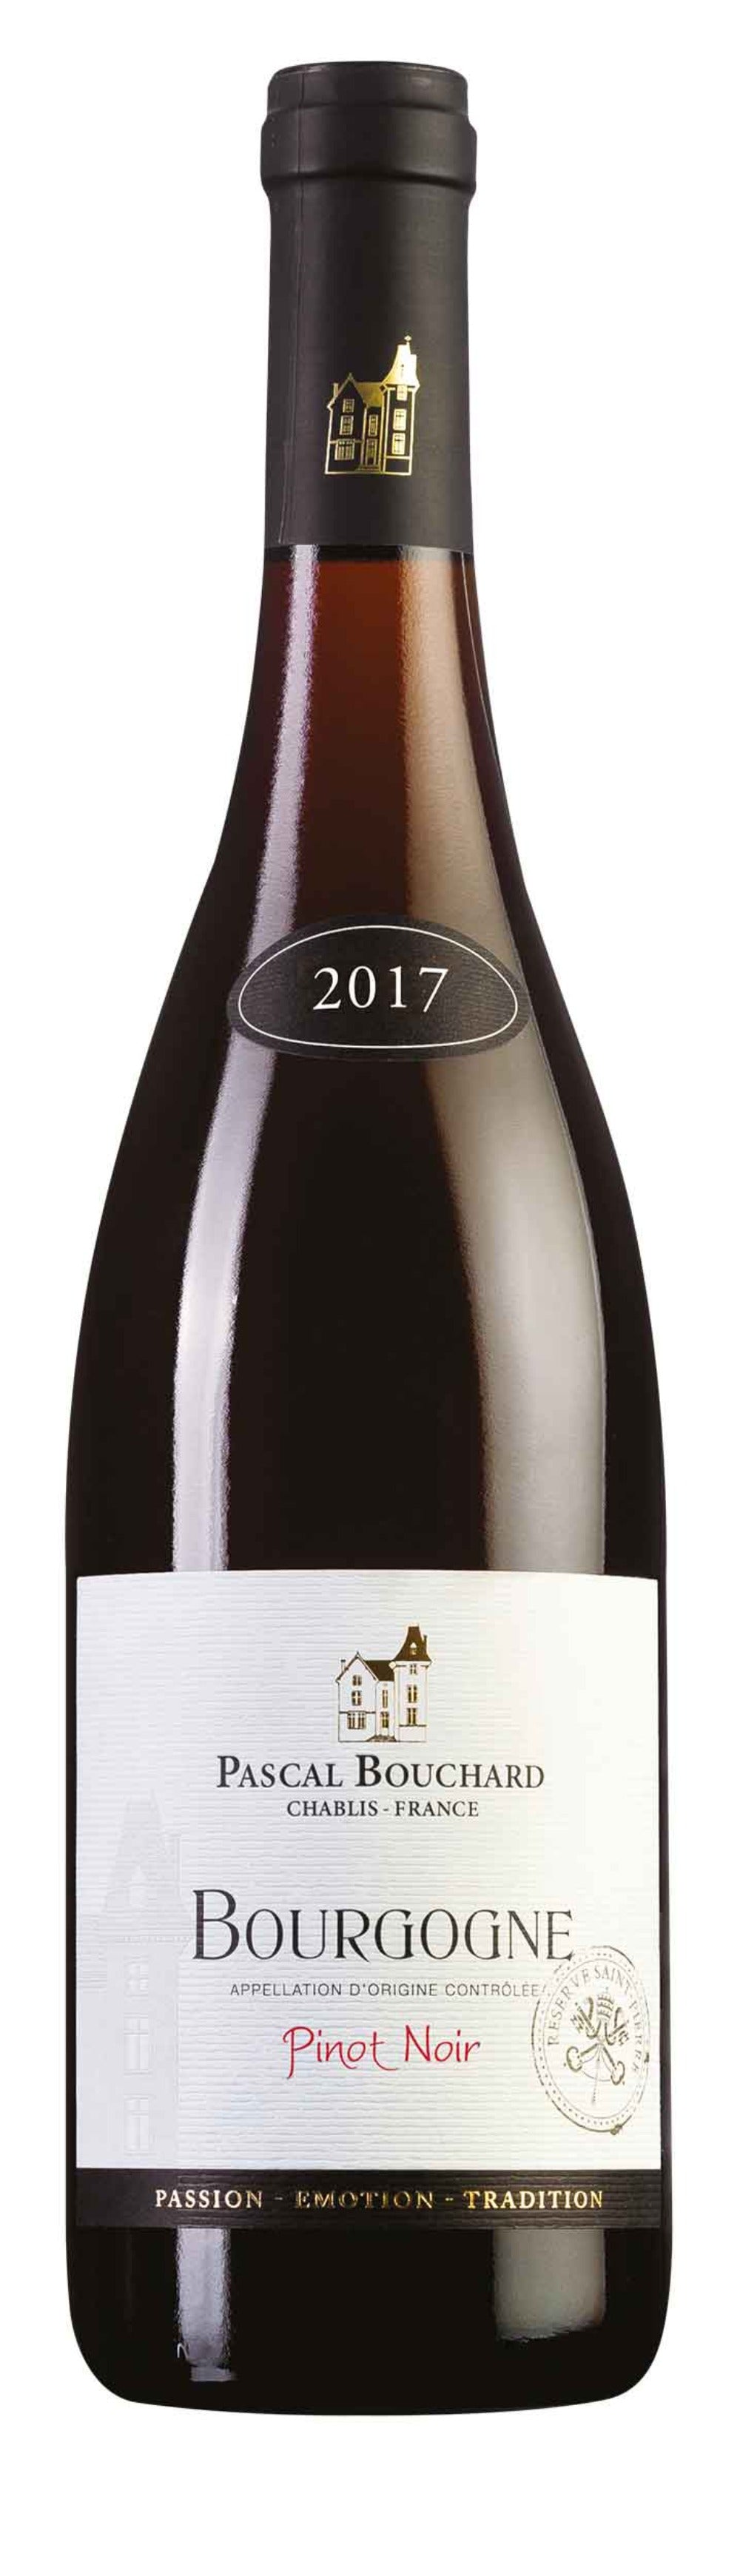 Pascal Bouchard Bourgogne Pinot Noir 2017